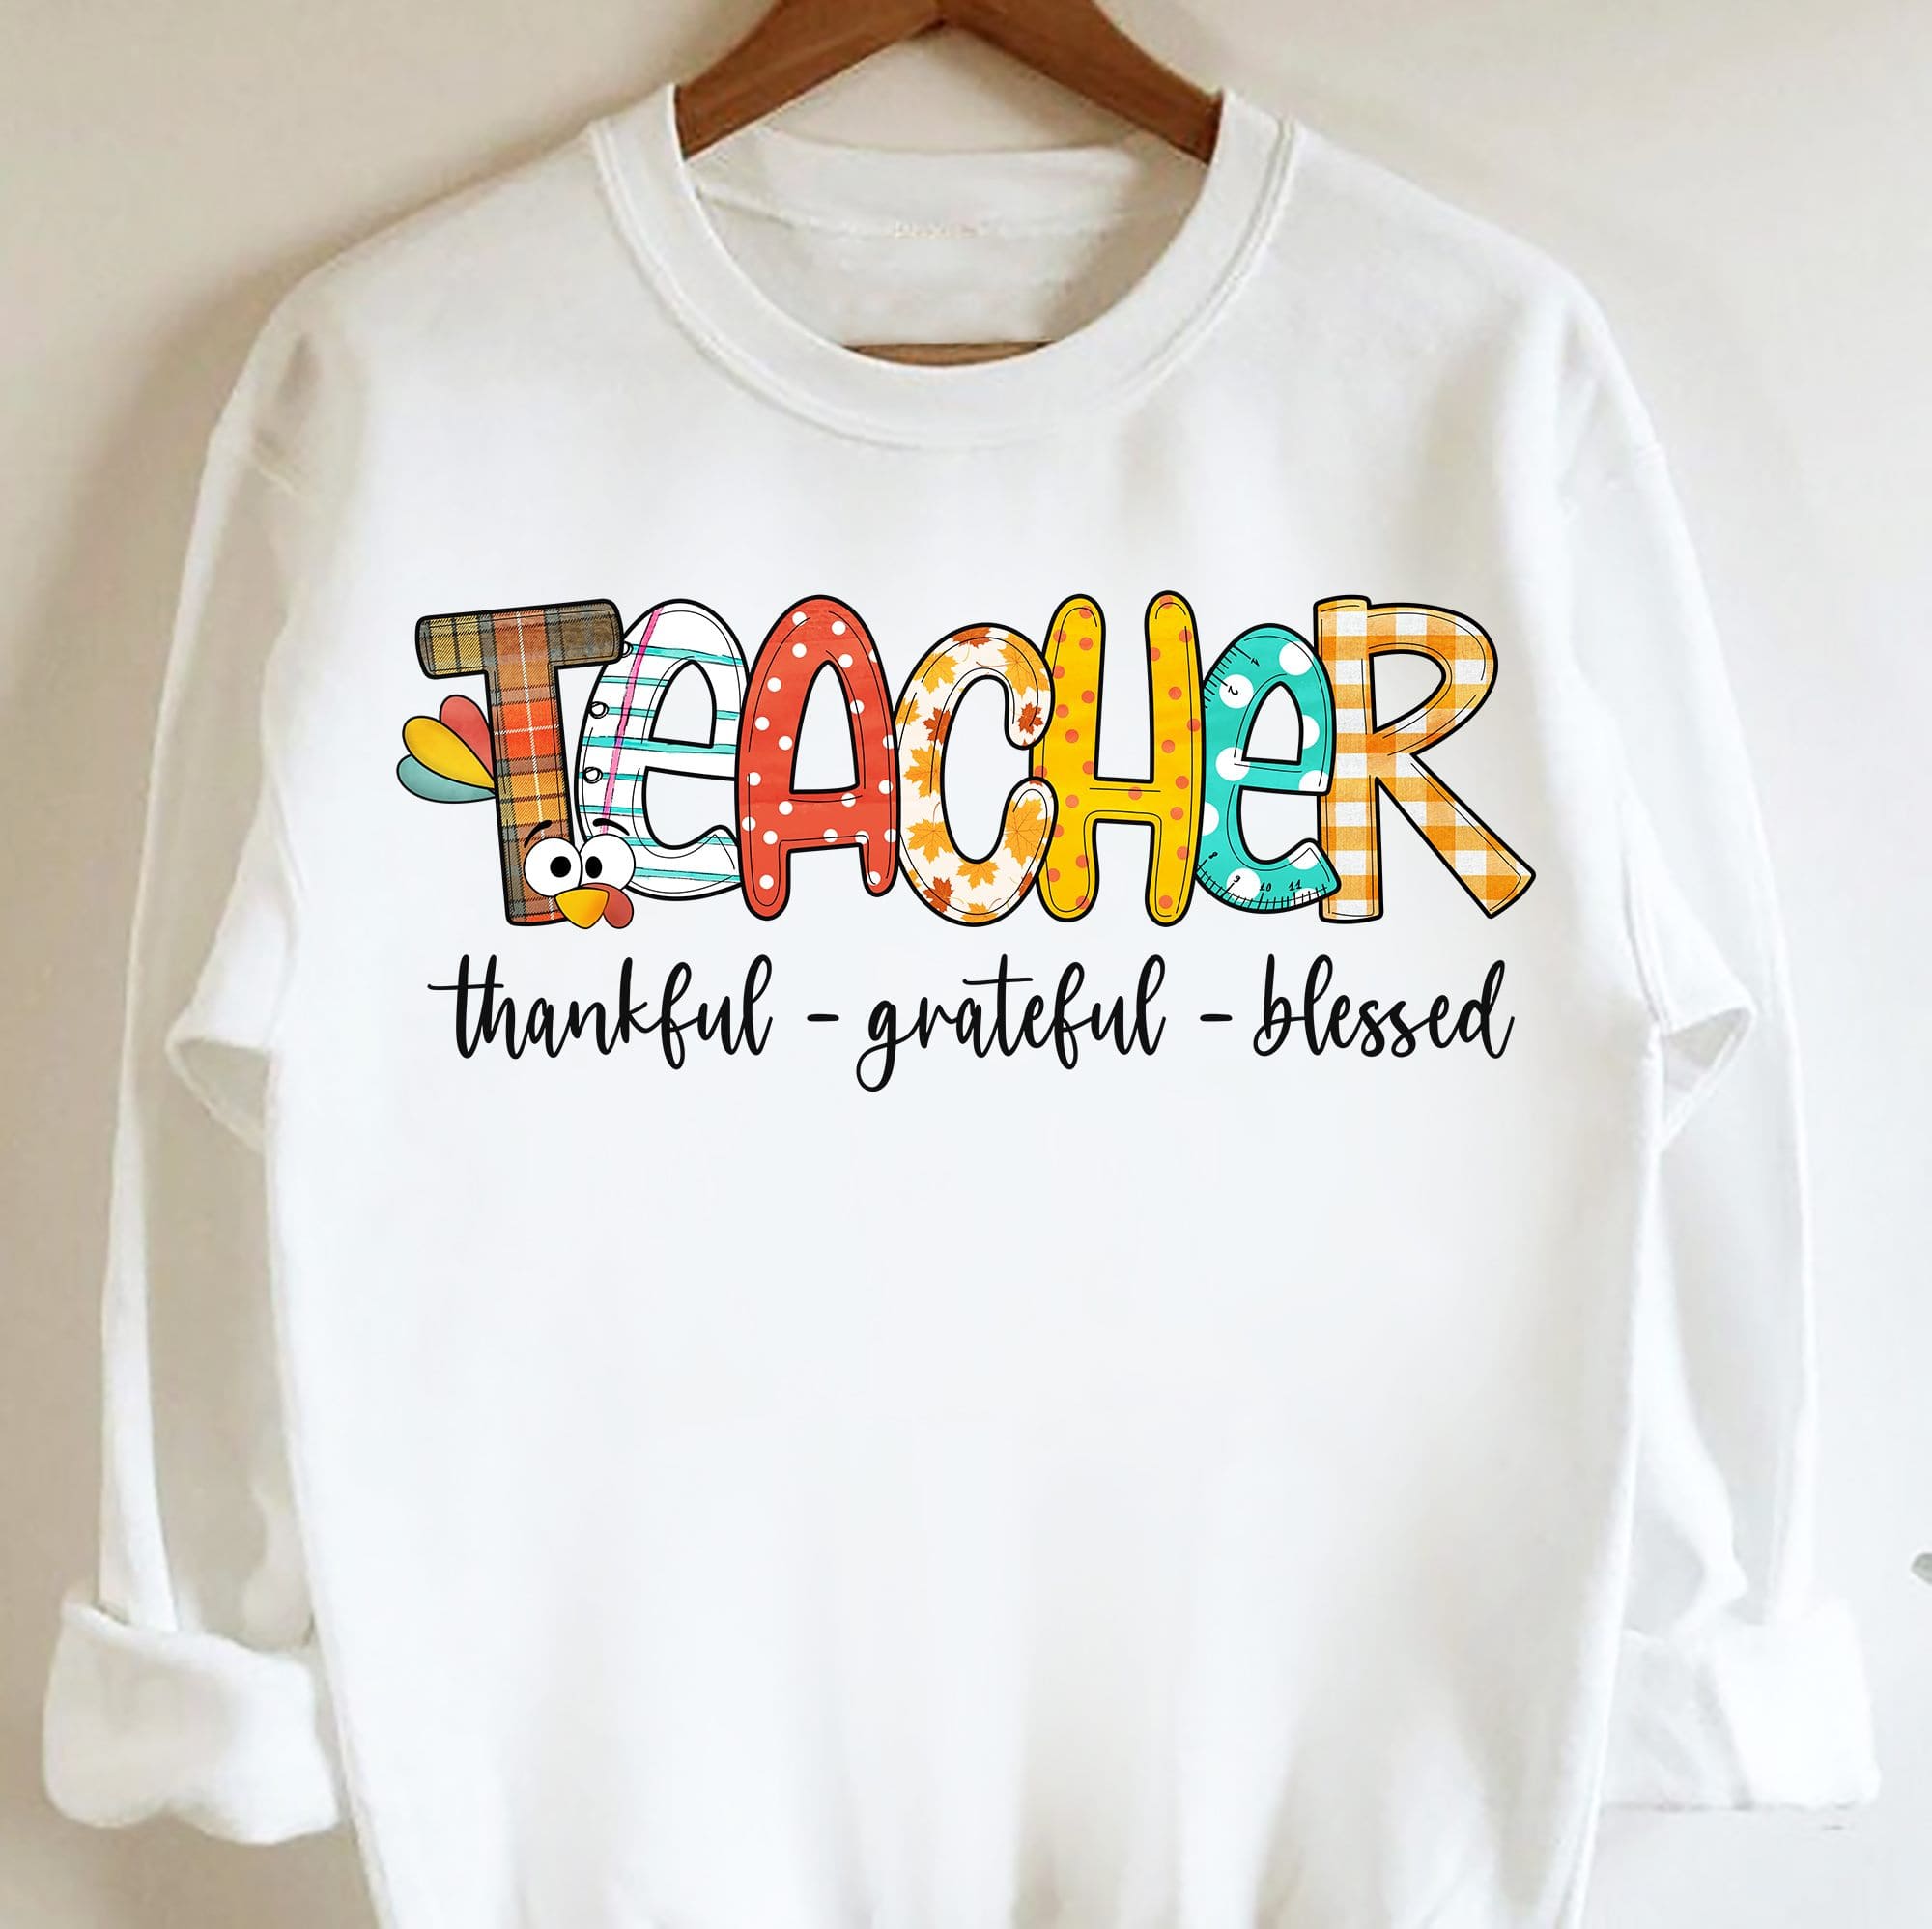 Teacher gift shirt - Thankful grateful blessed, teacher the job